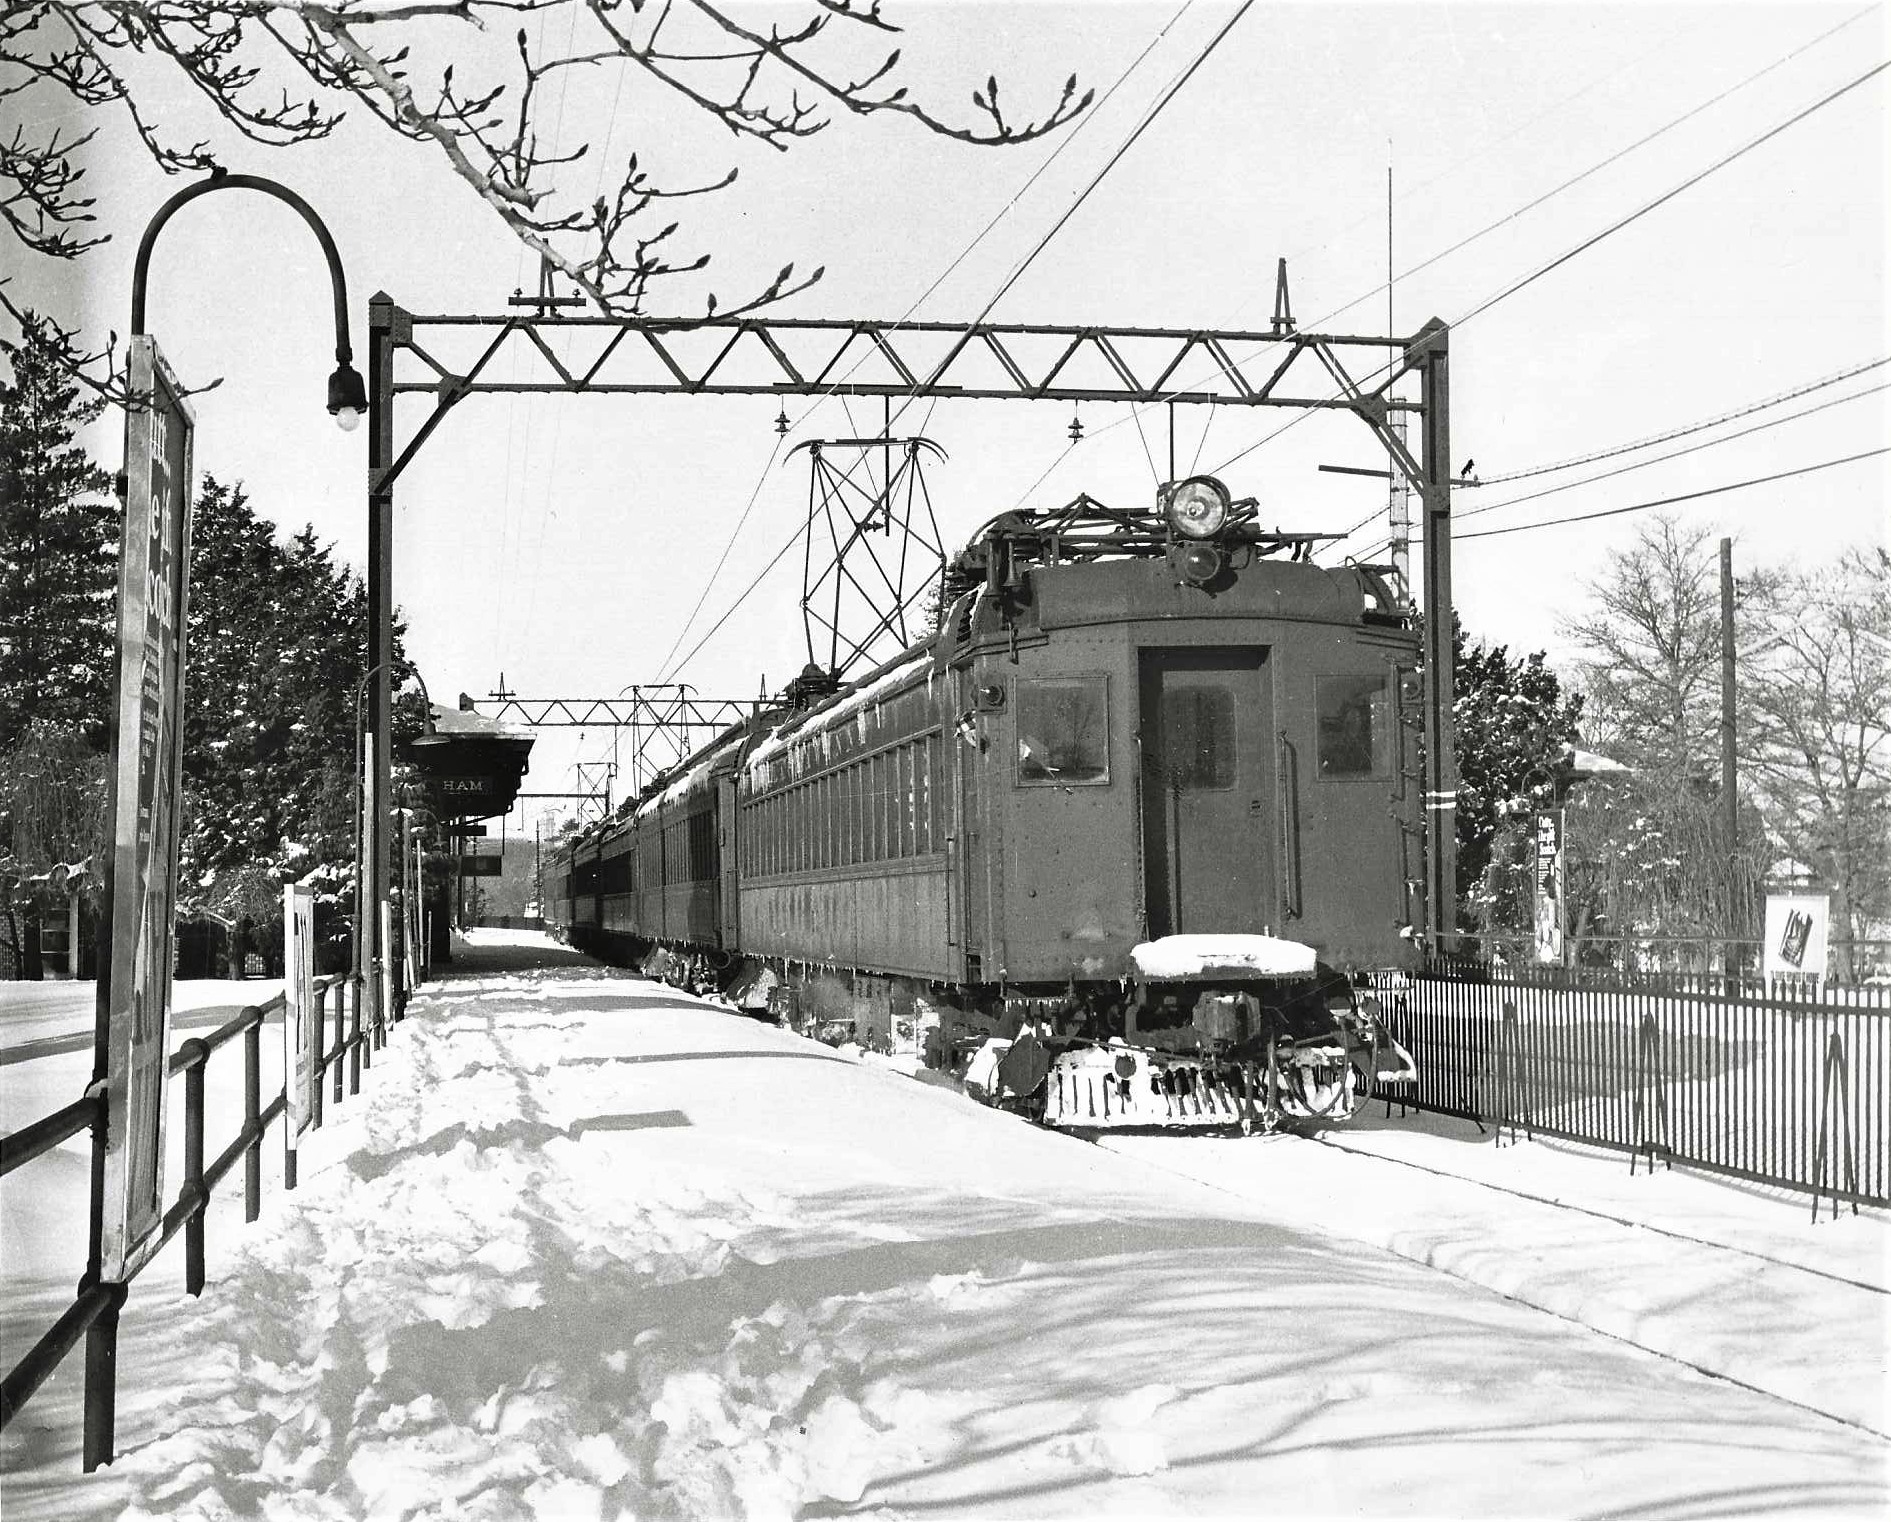 EL # 620, Dover to Hoboken leaving Chatham, NJ 01-02-1970 - Gerry Meyle Photo.jpg